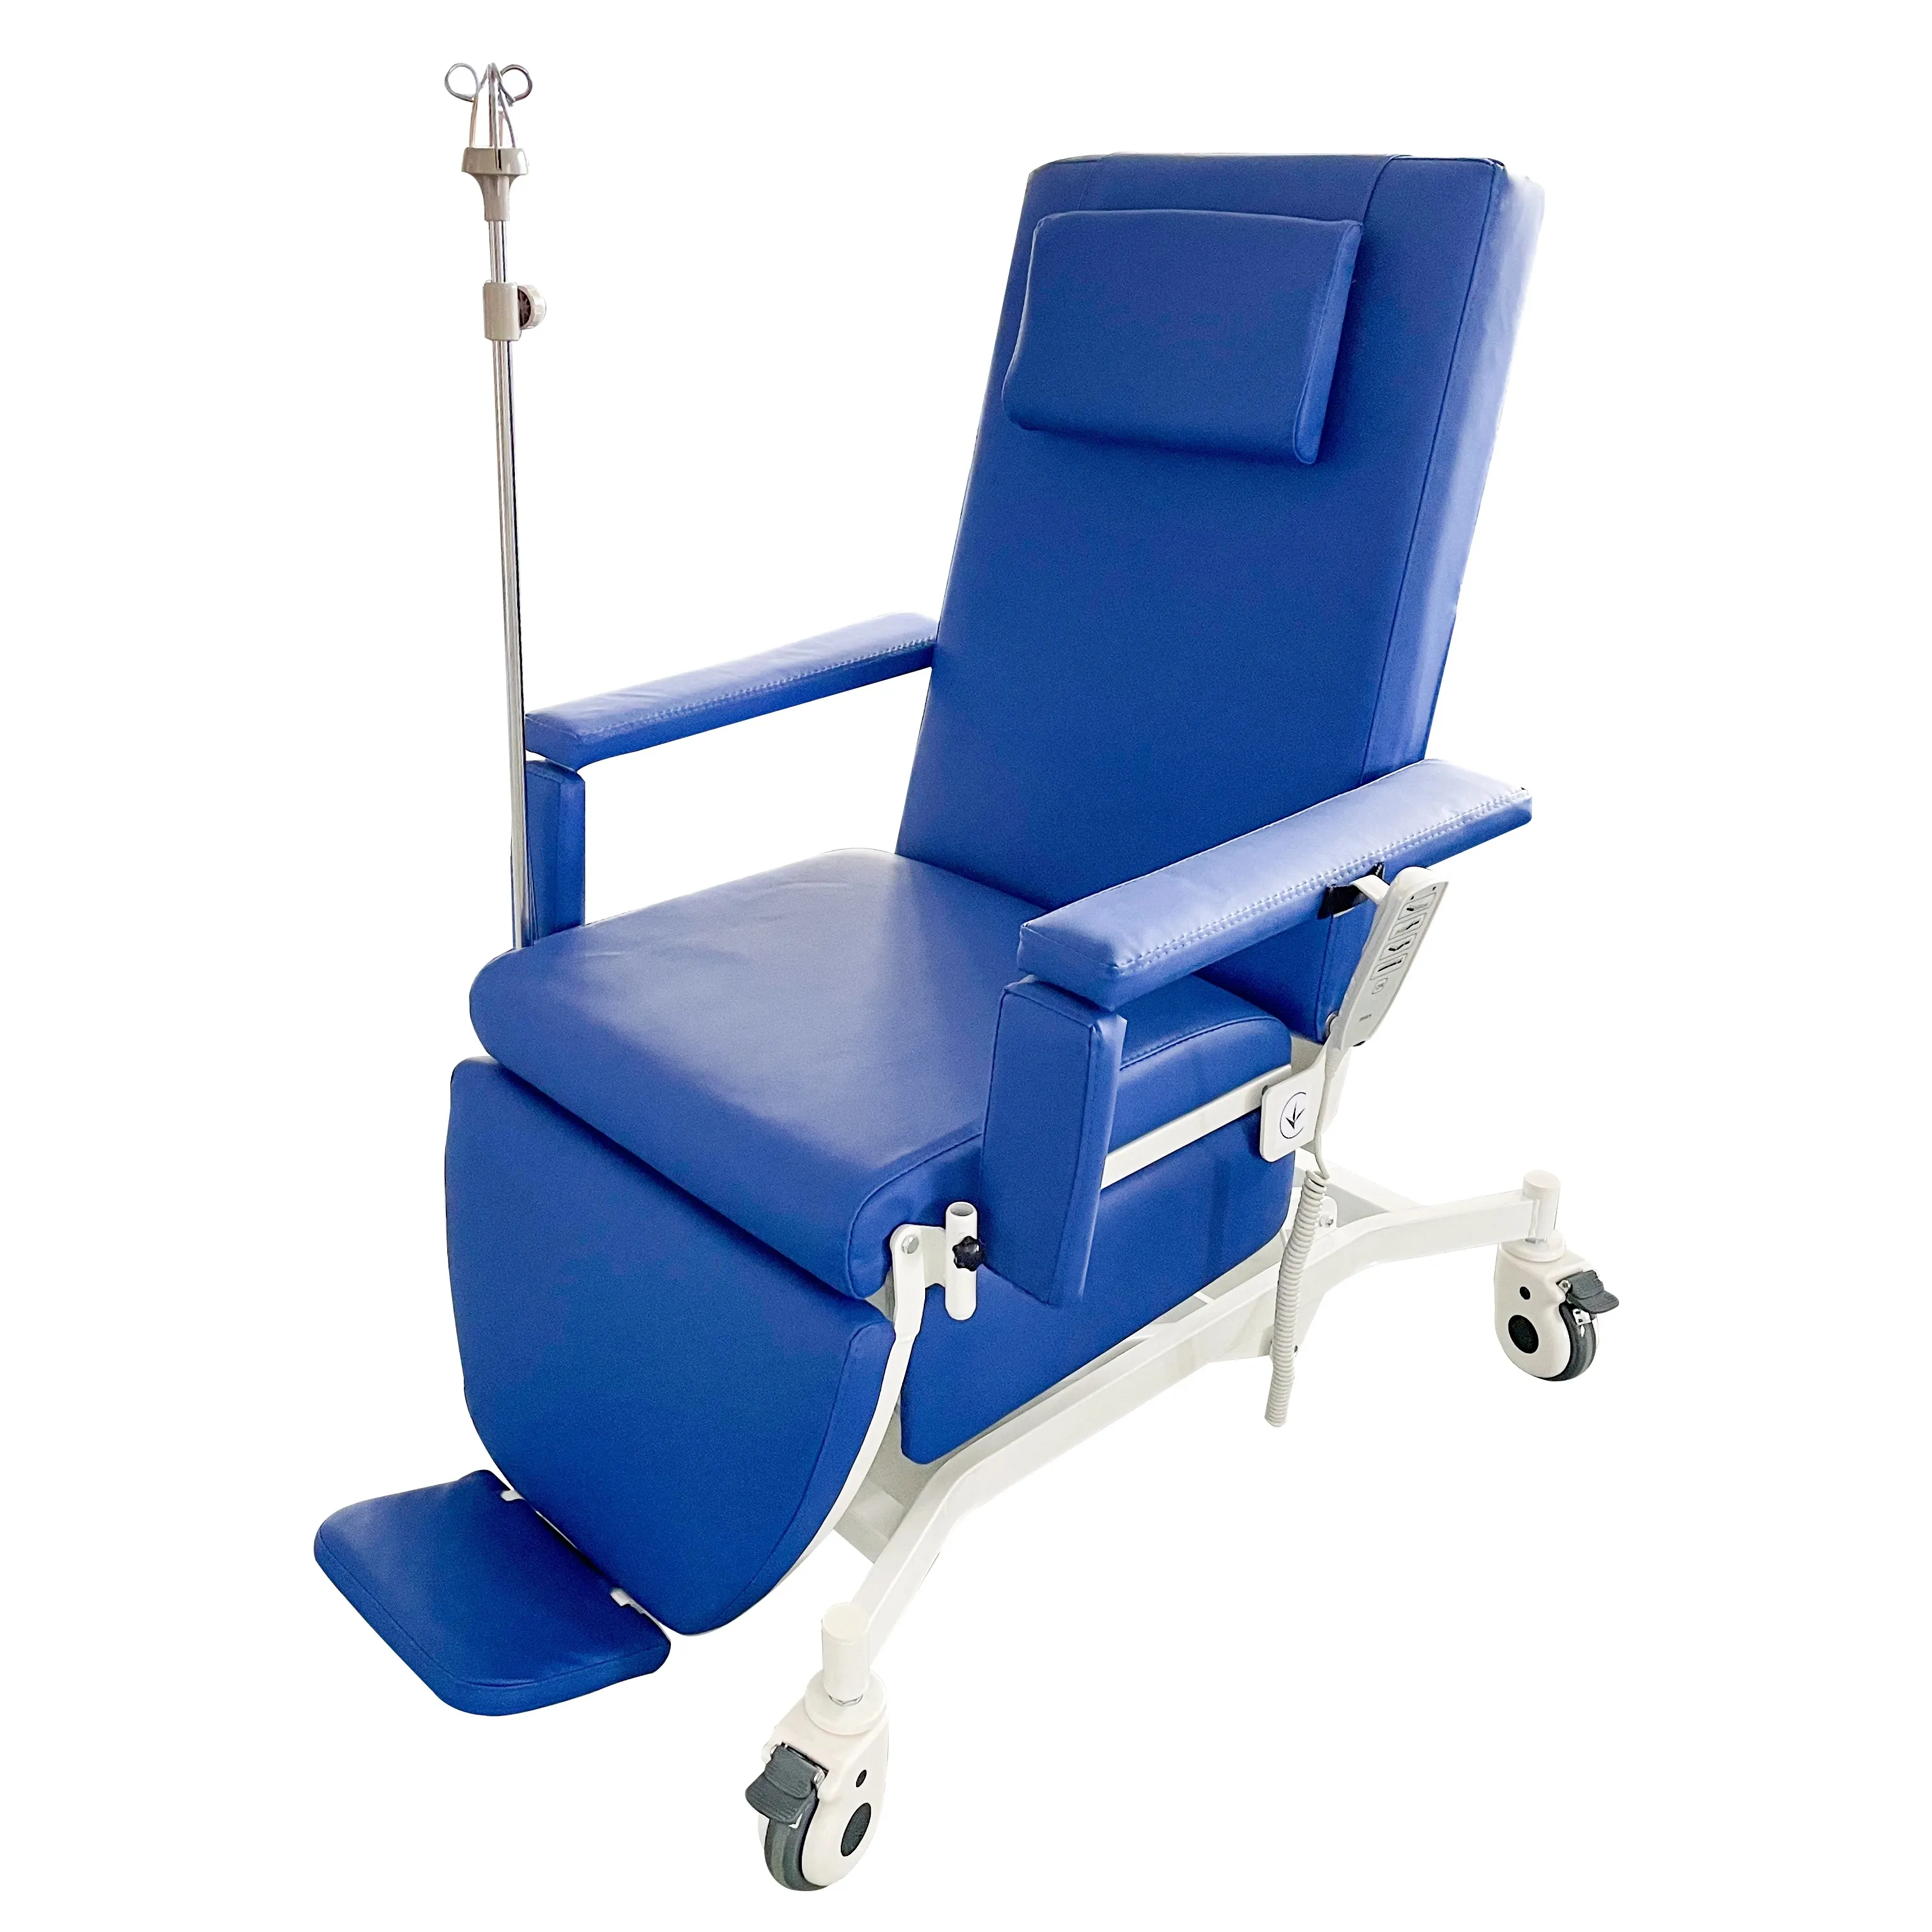 Sedia per dialisi multifunzione medica per emodialisi sedia per dialisi elettrica sedia per donazione di sangue sedia per TX-3